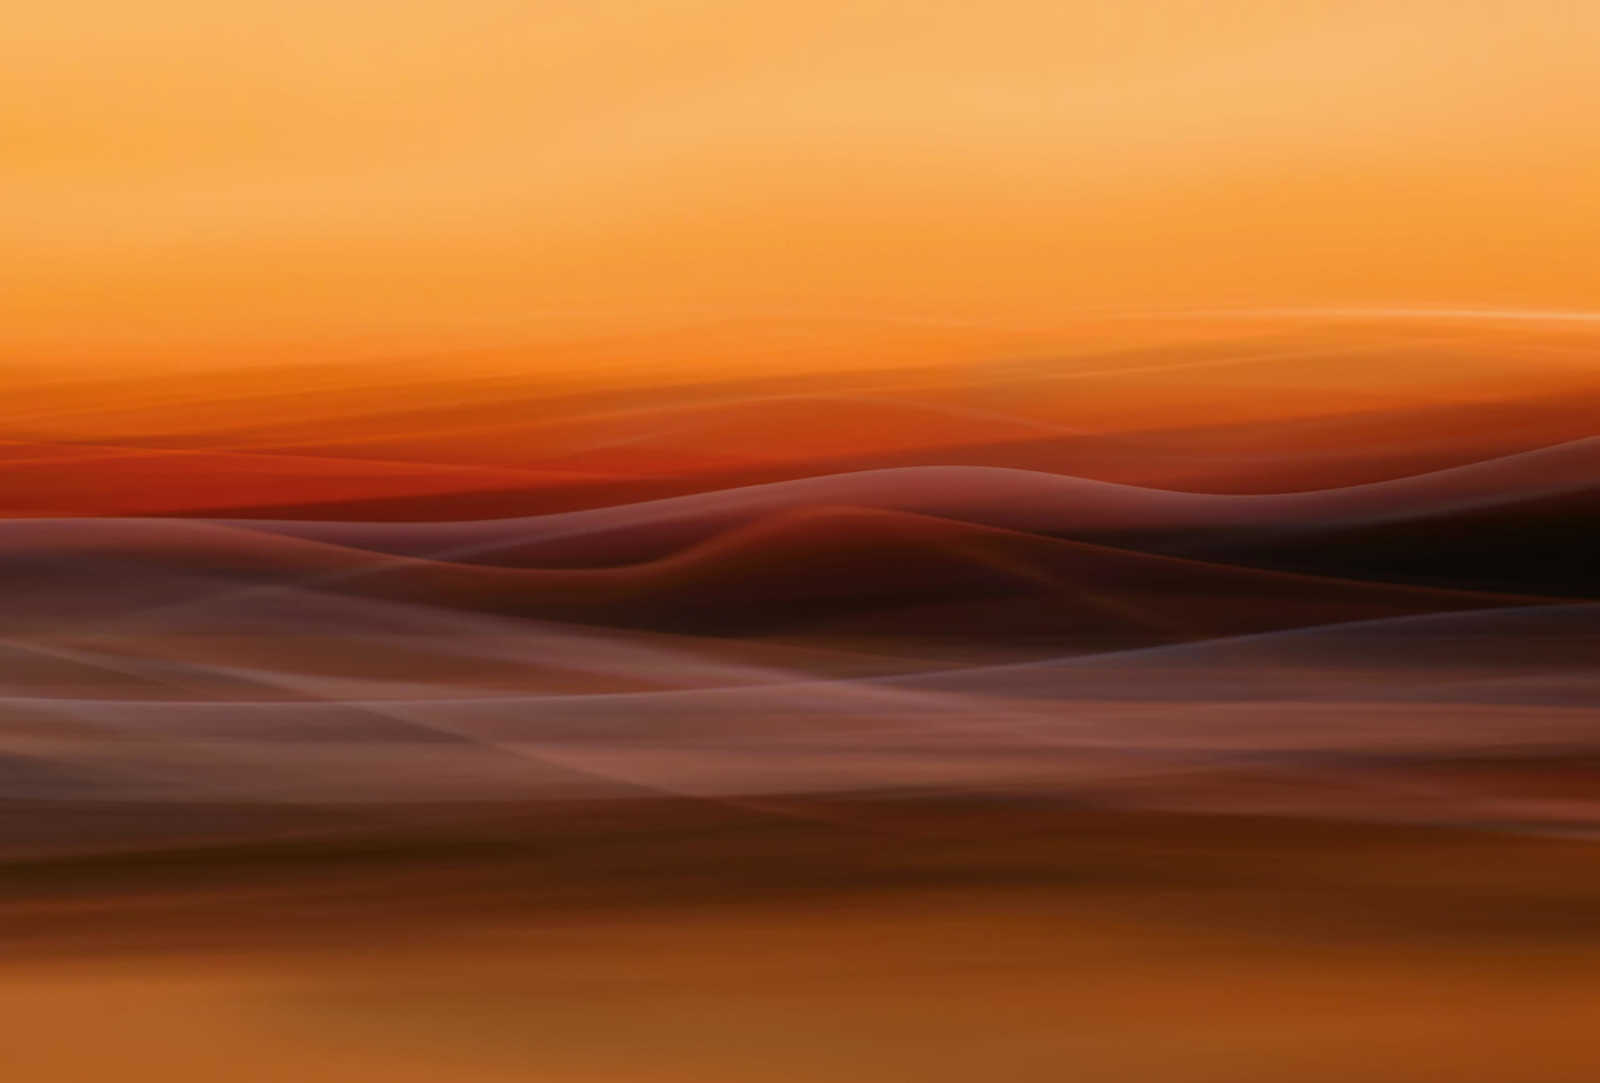         Photo wallpaper abstract fog - orange, yellow, red
    